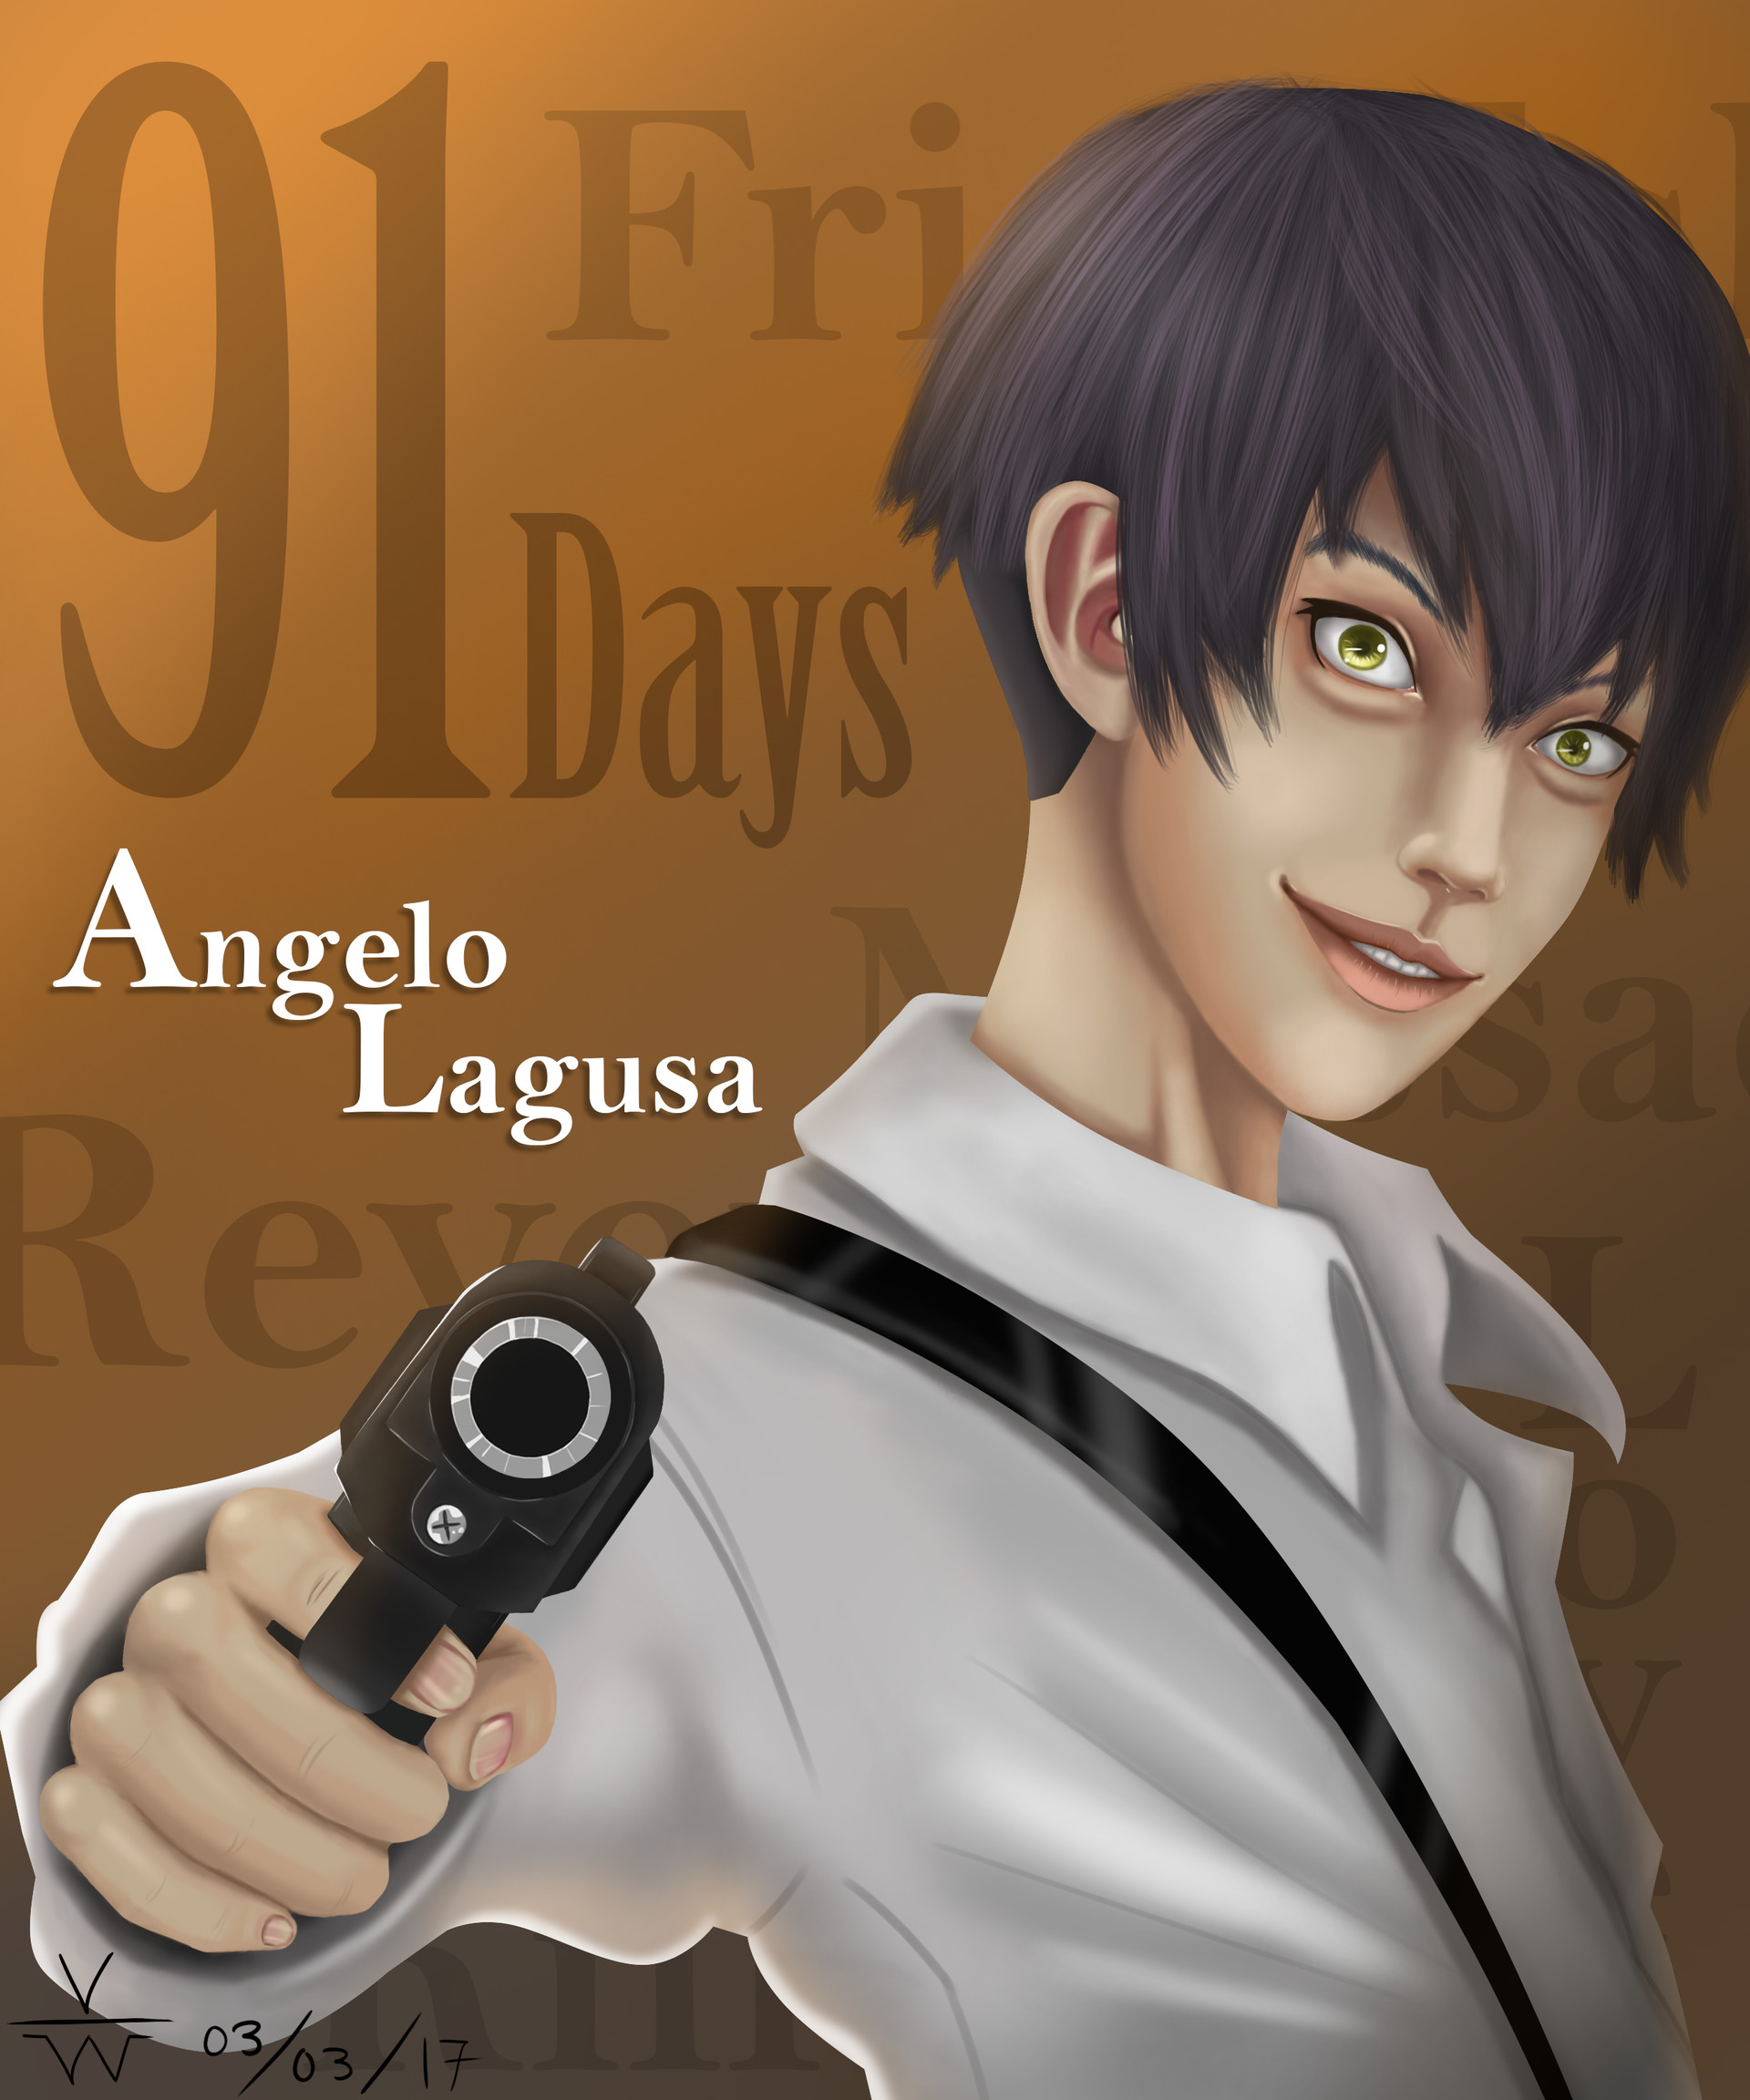 Angelo, 91 Days